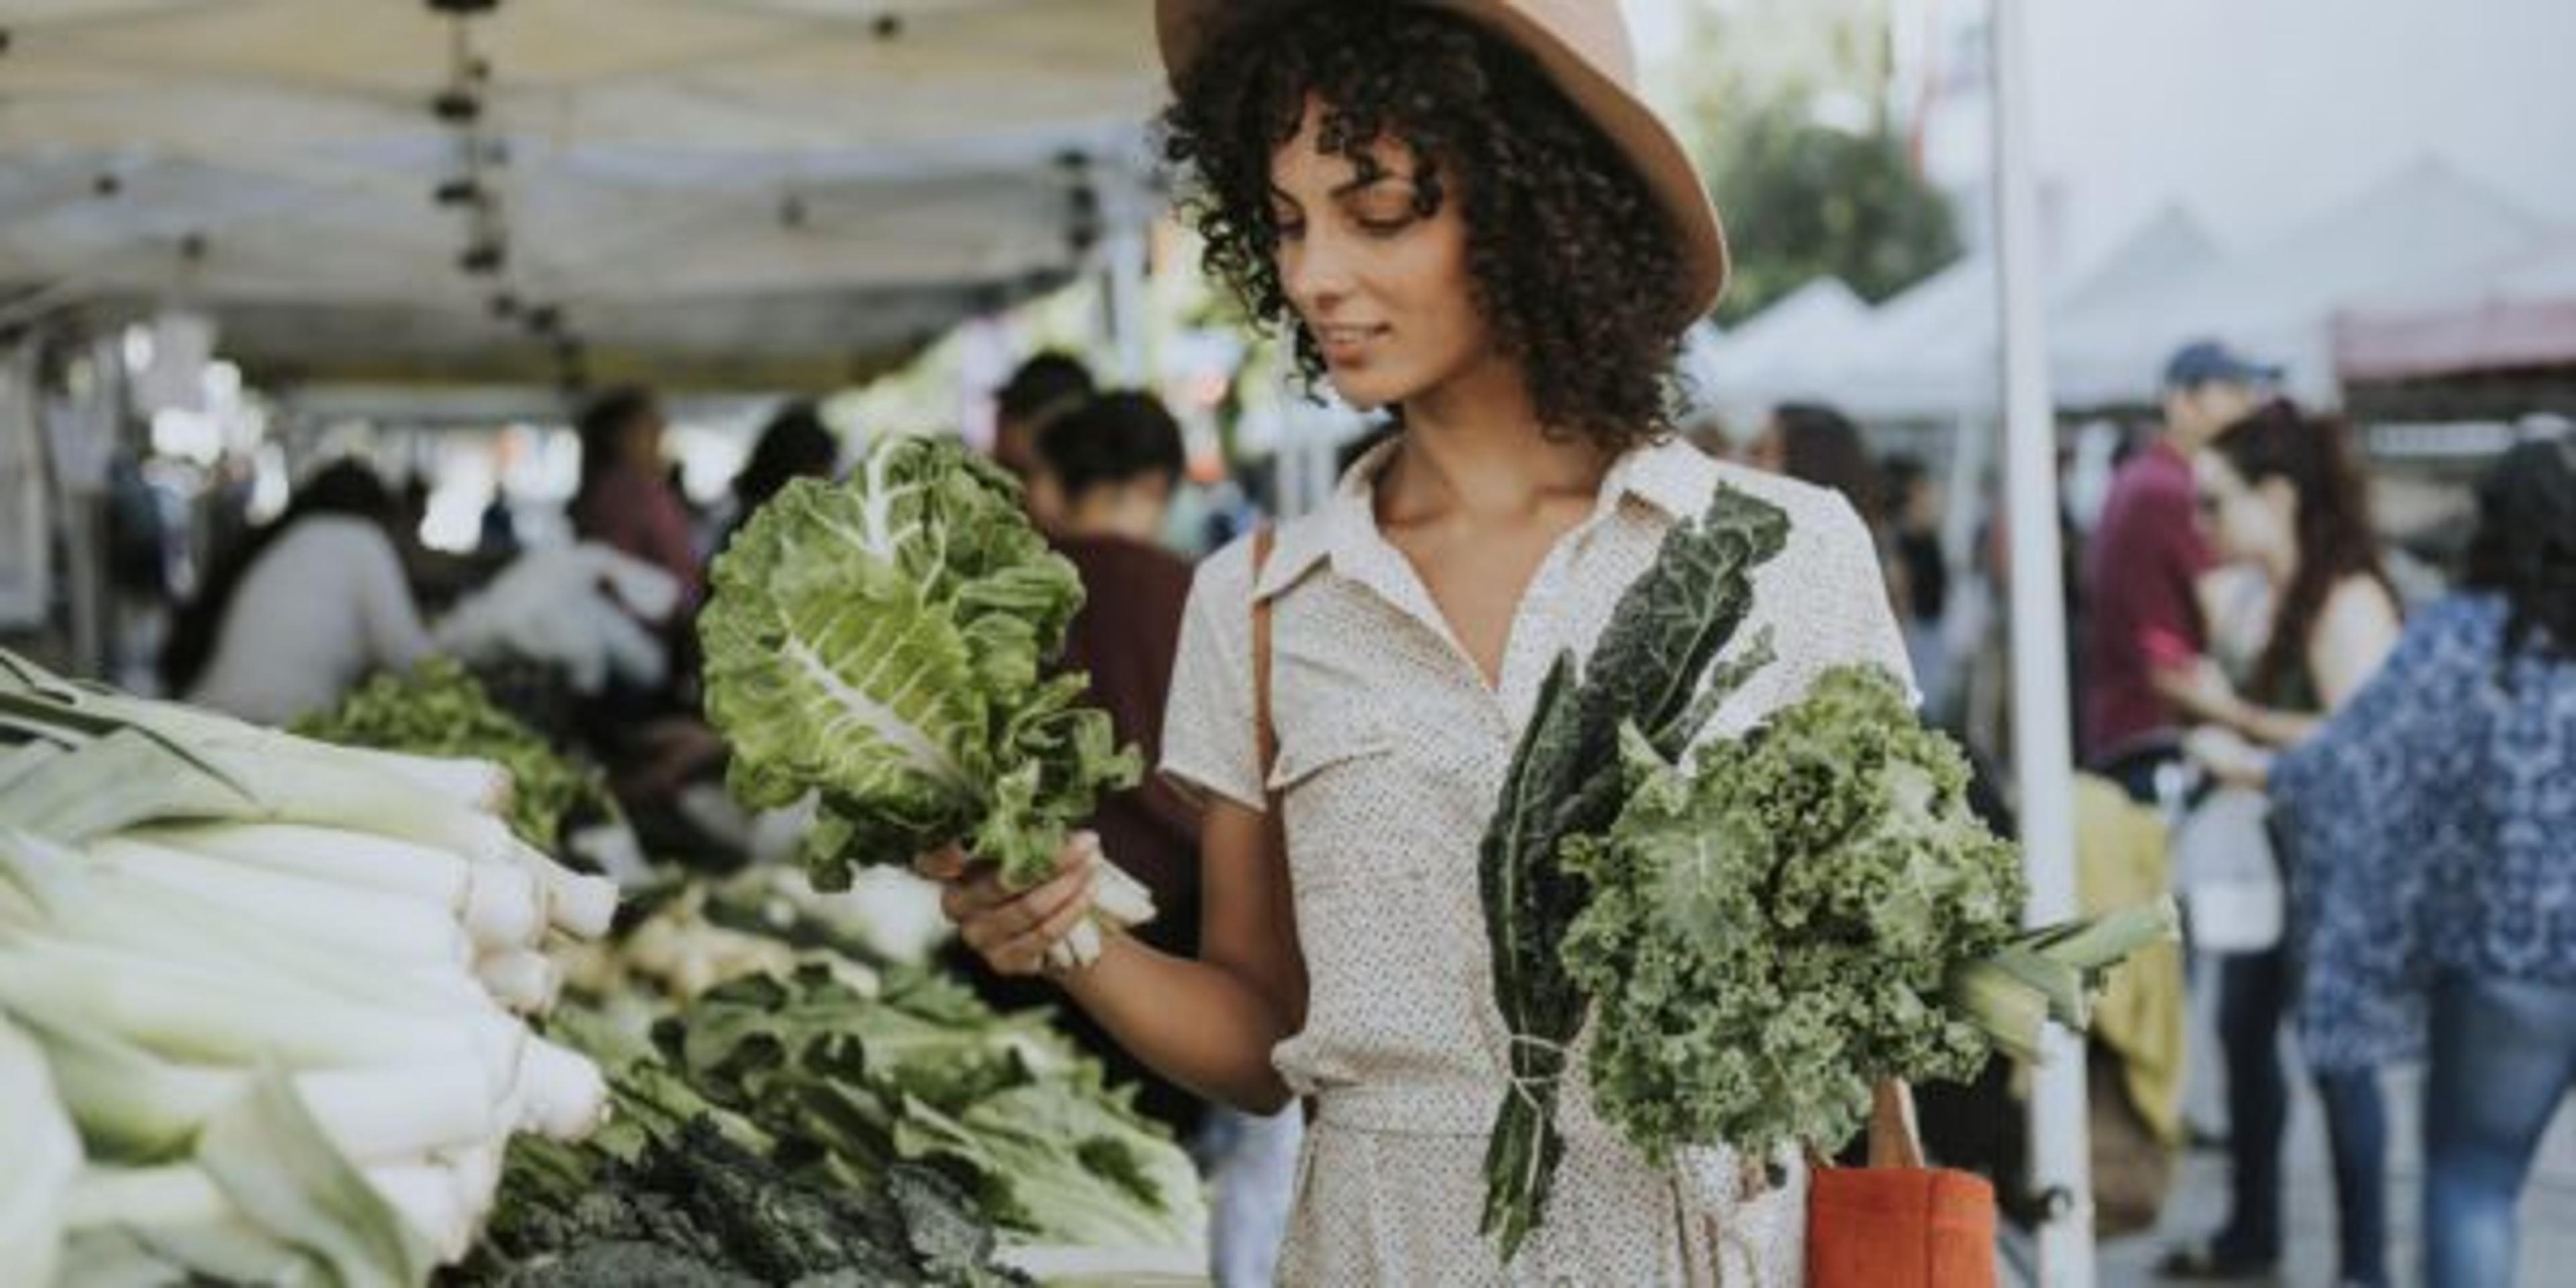 Woman buys kale at a farmer's market